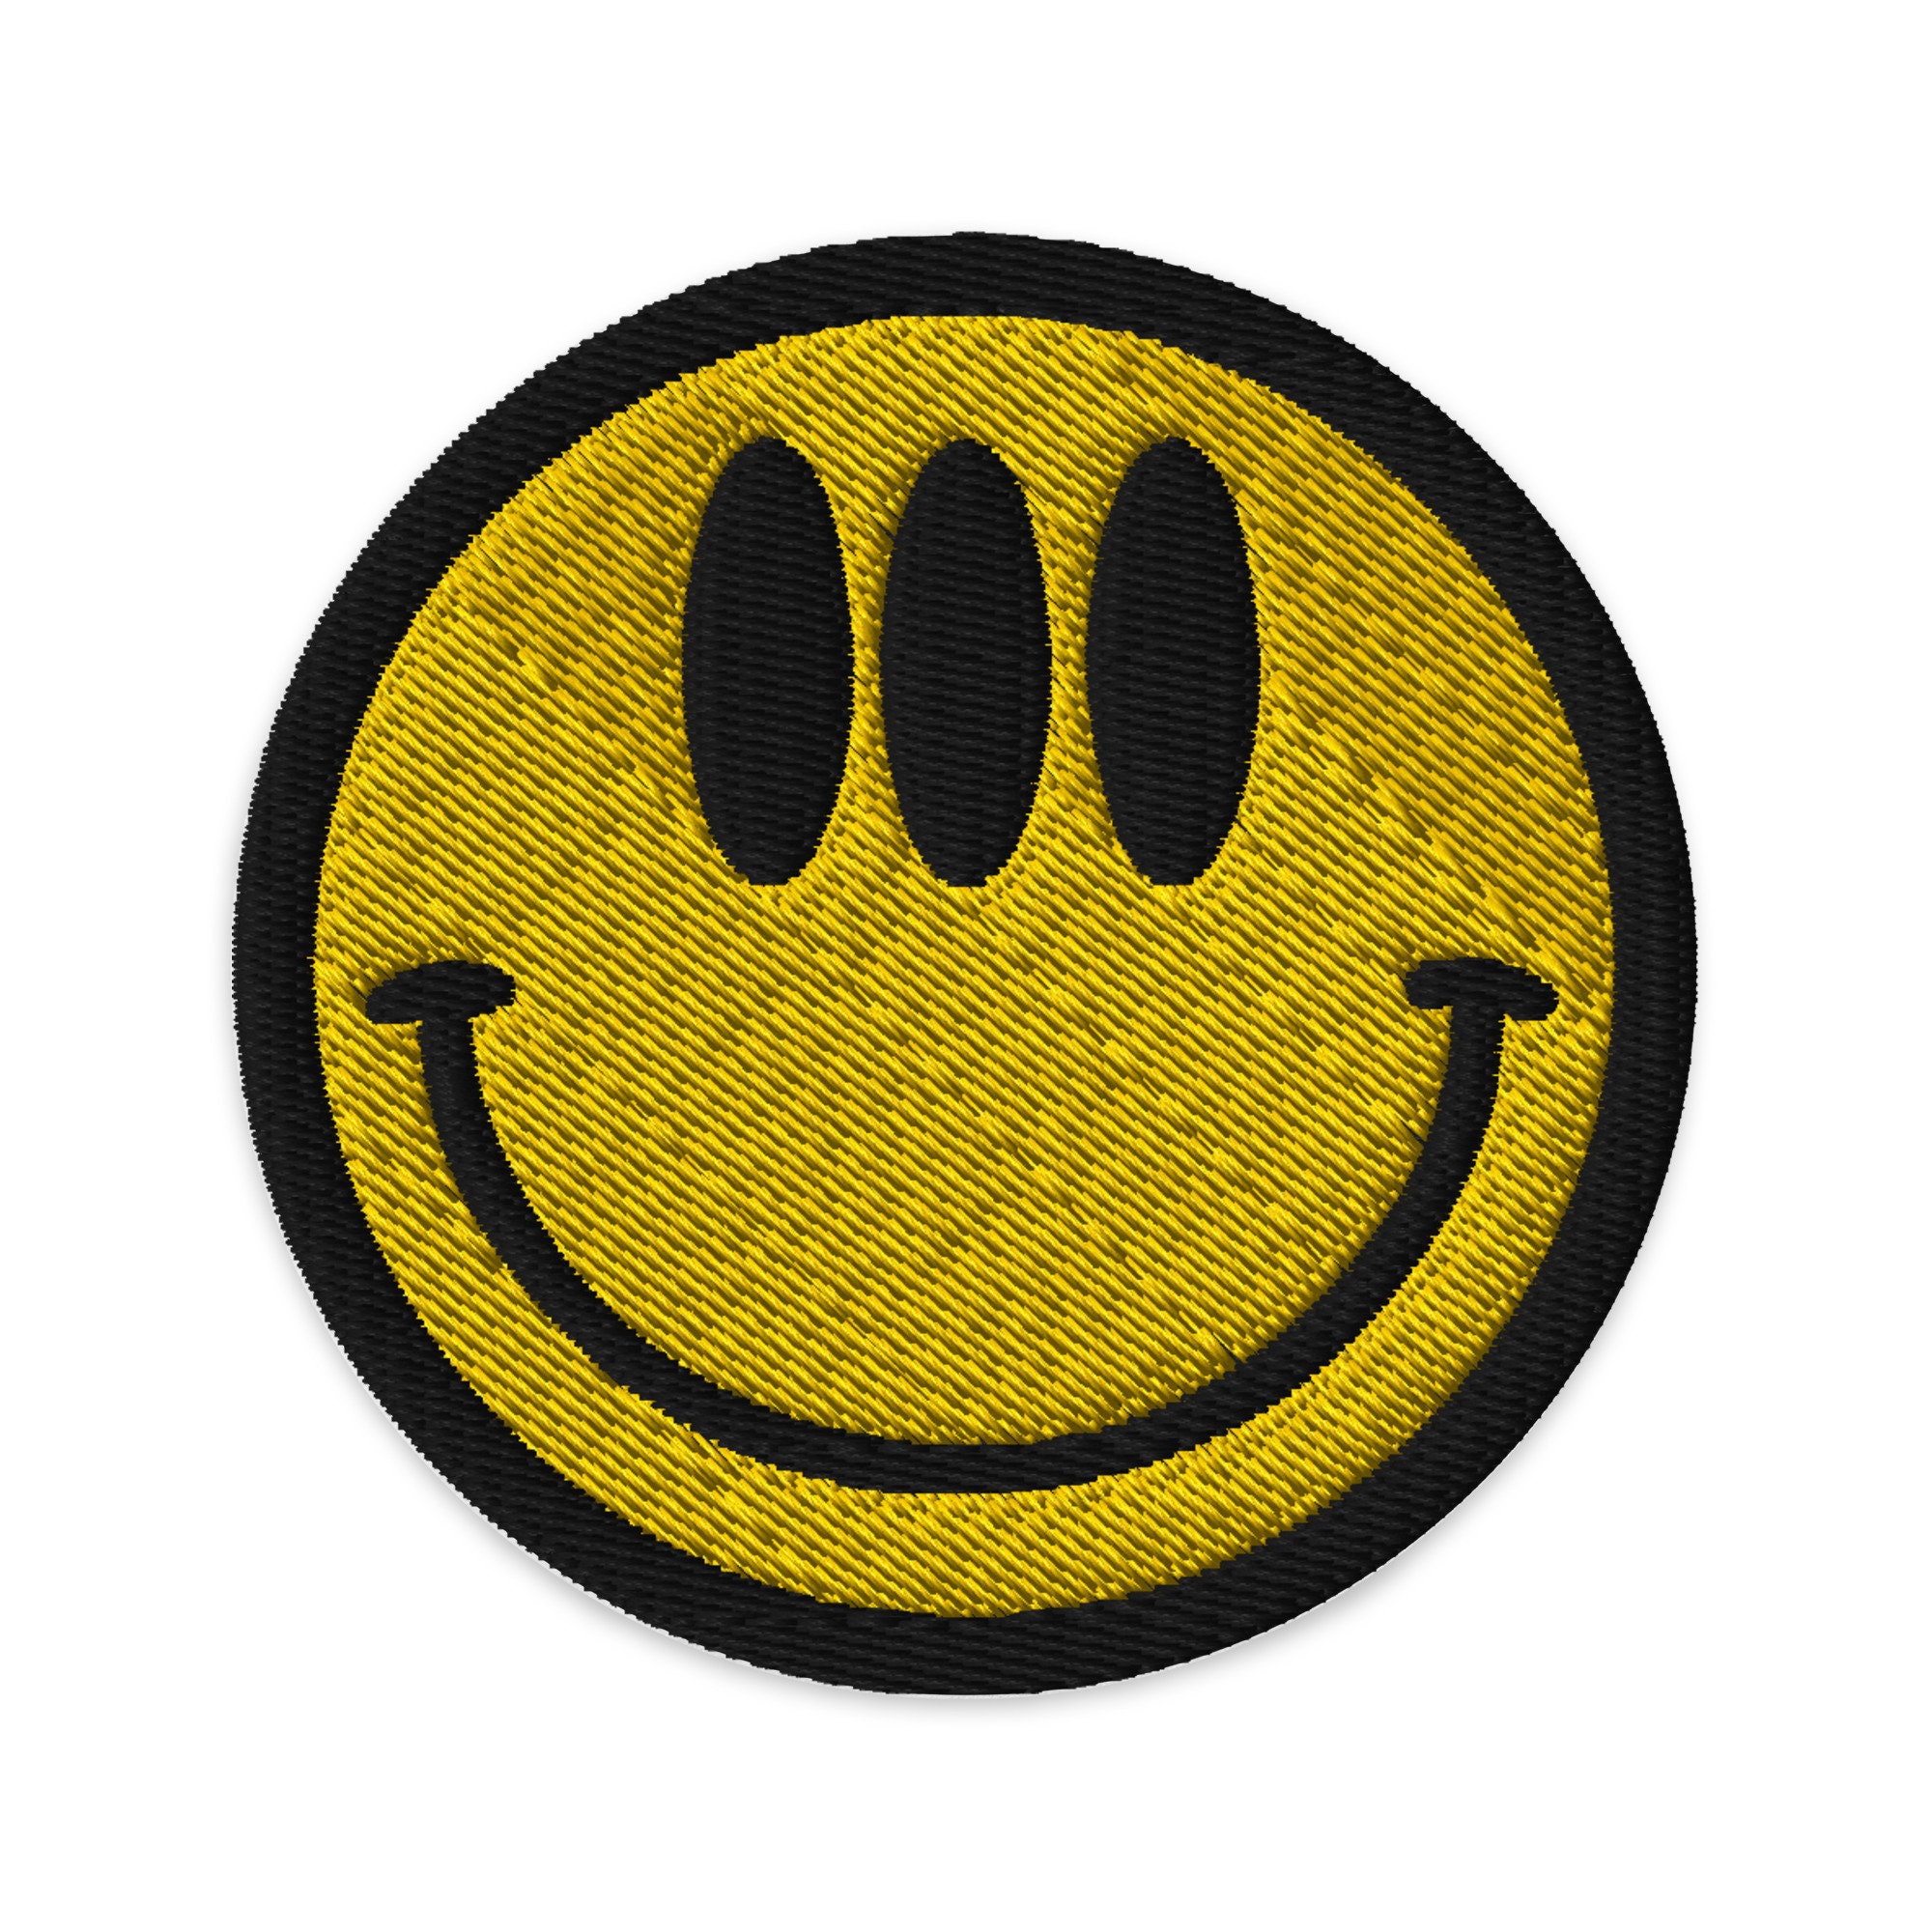 Smiley face patch Sticker for Sale by kattiejaney